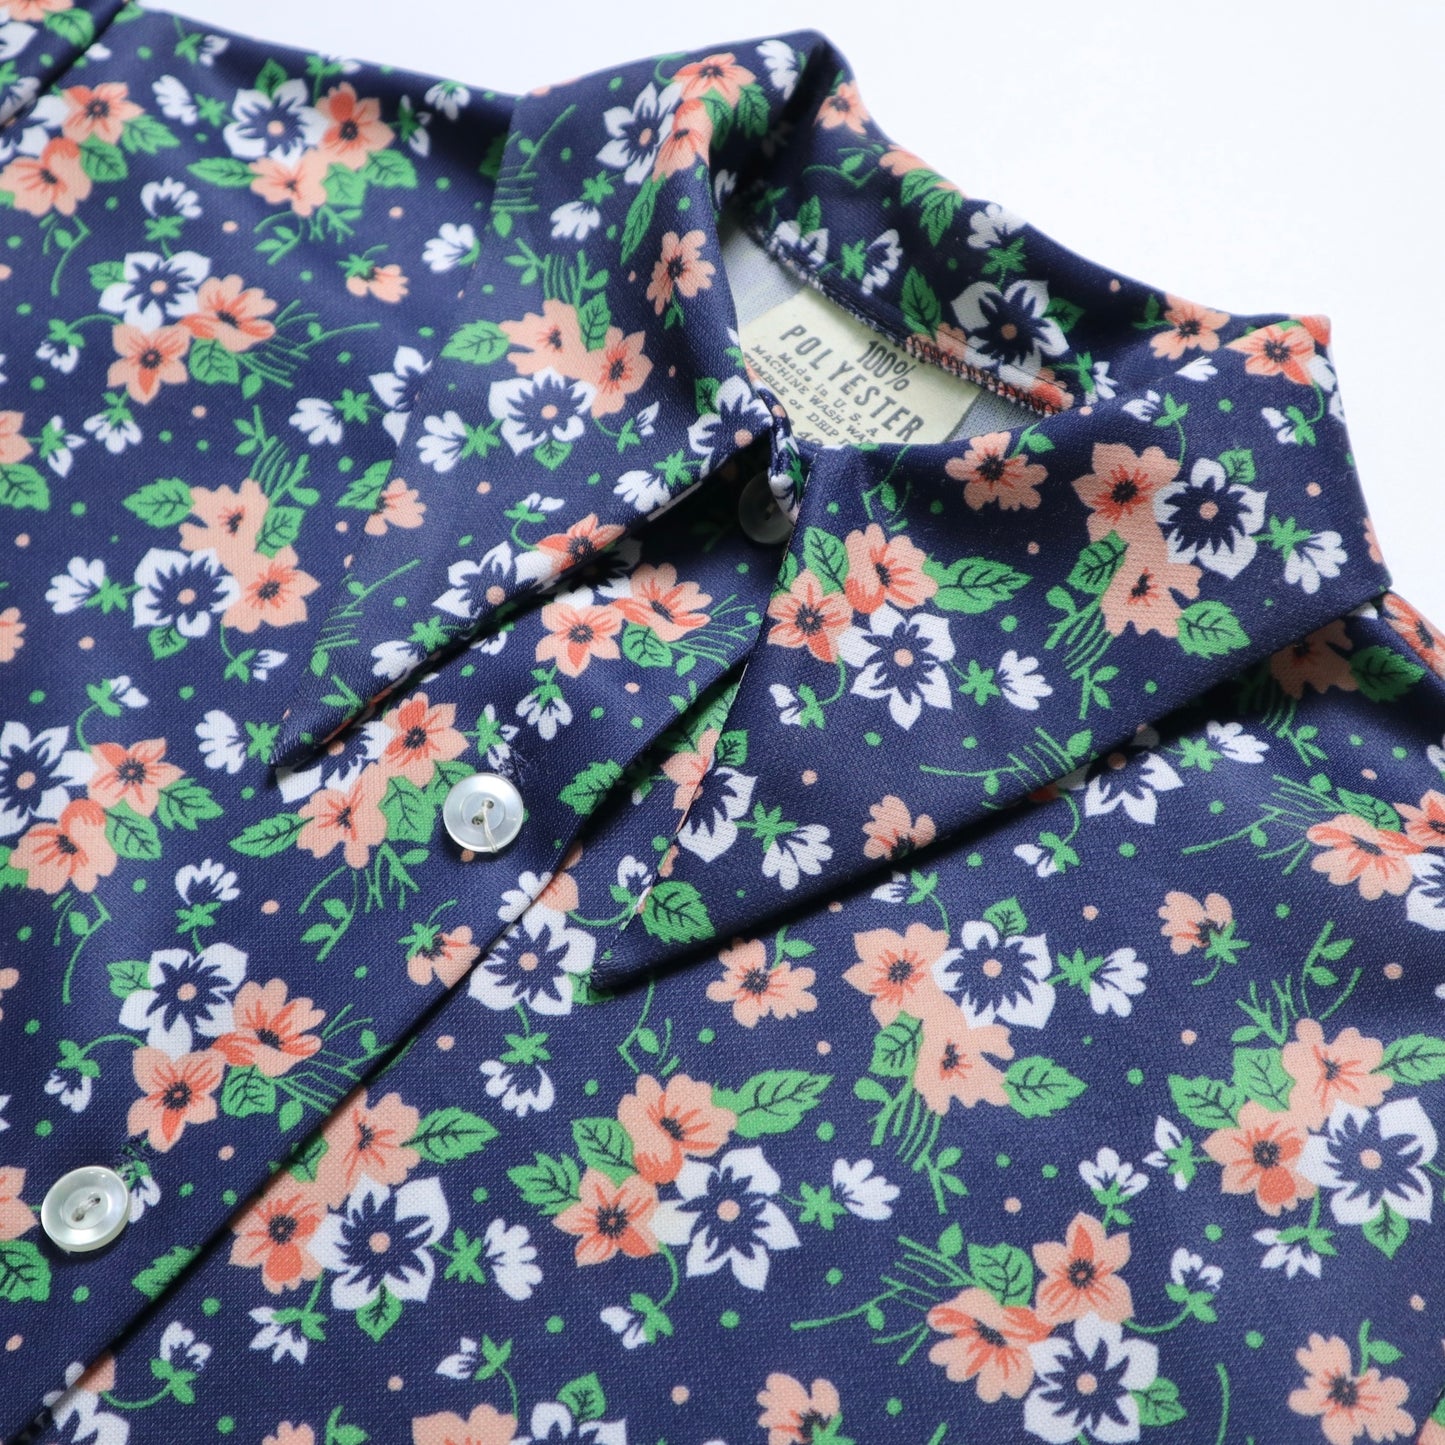 1980s American made blue printed arrow collar shirt polyester fabric